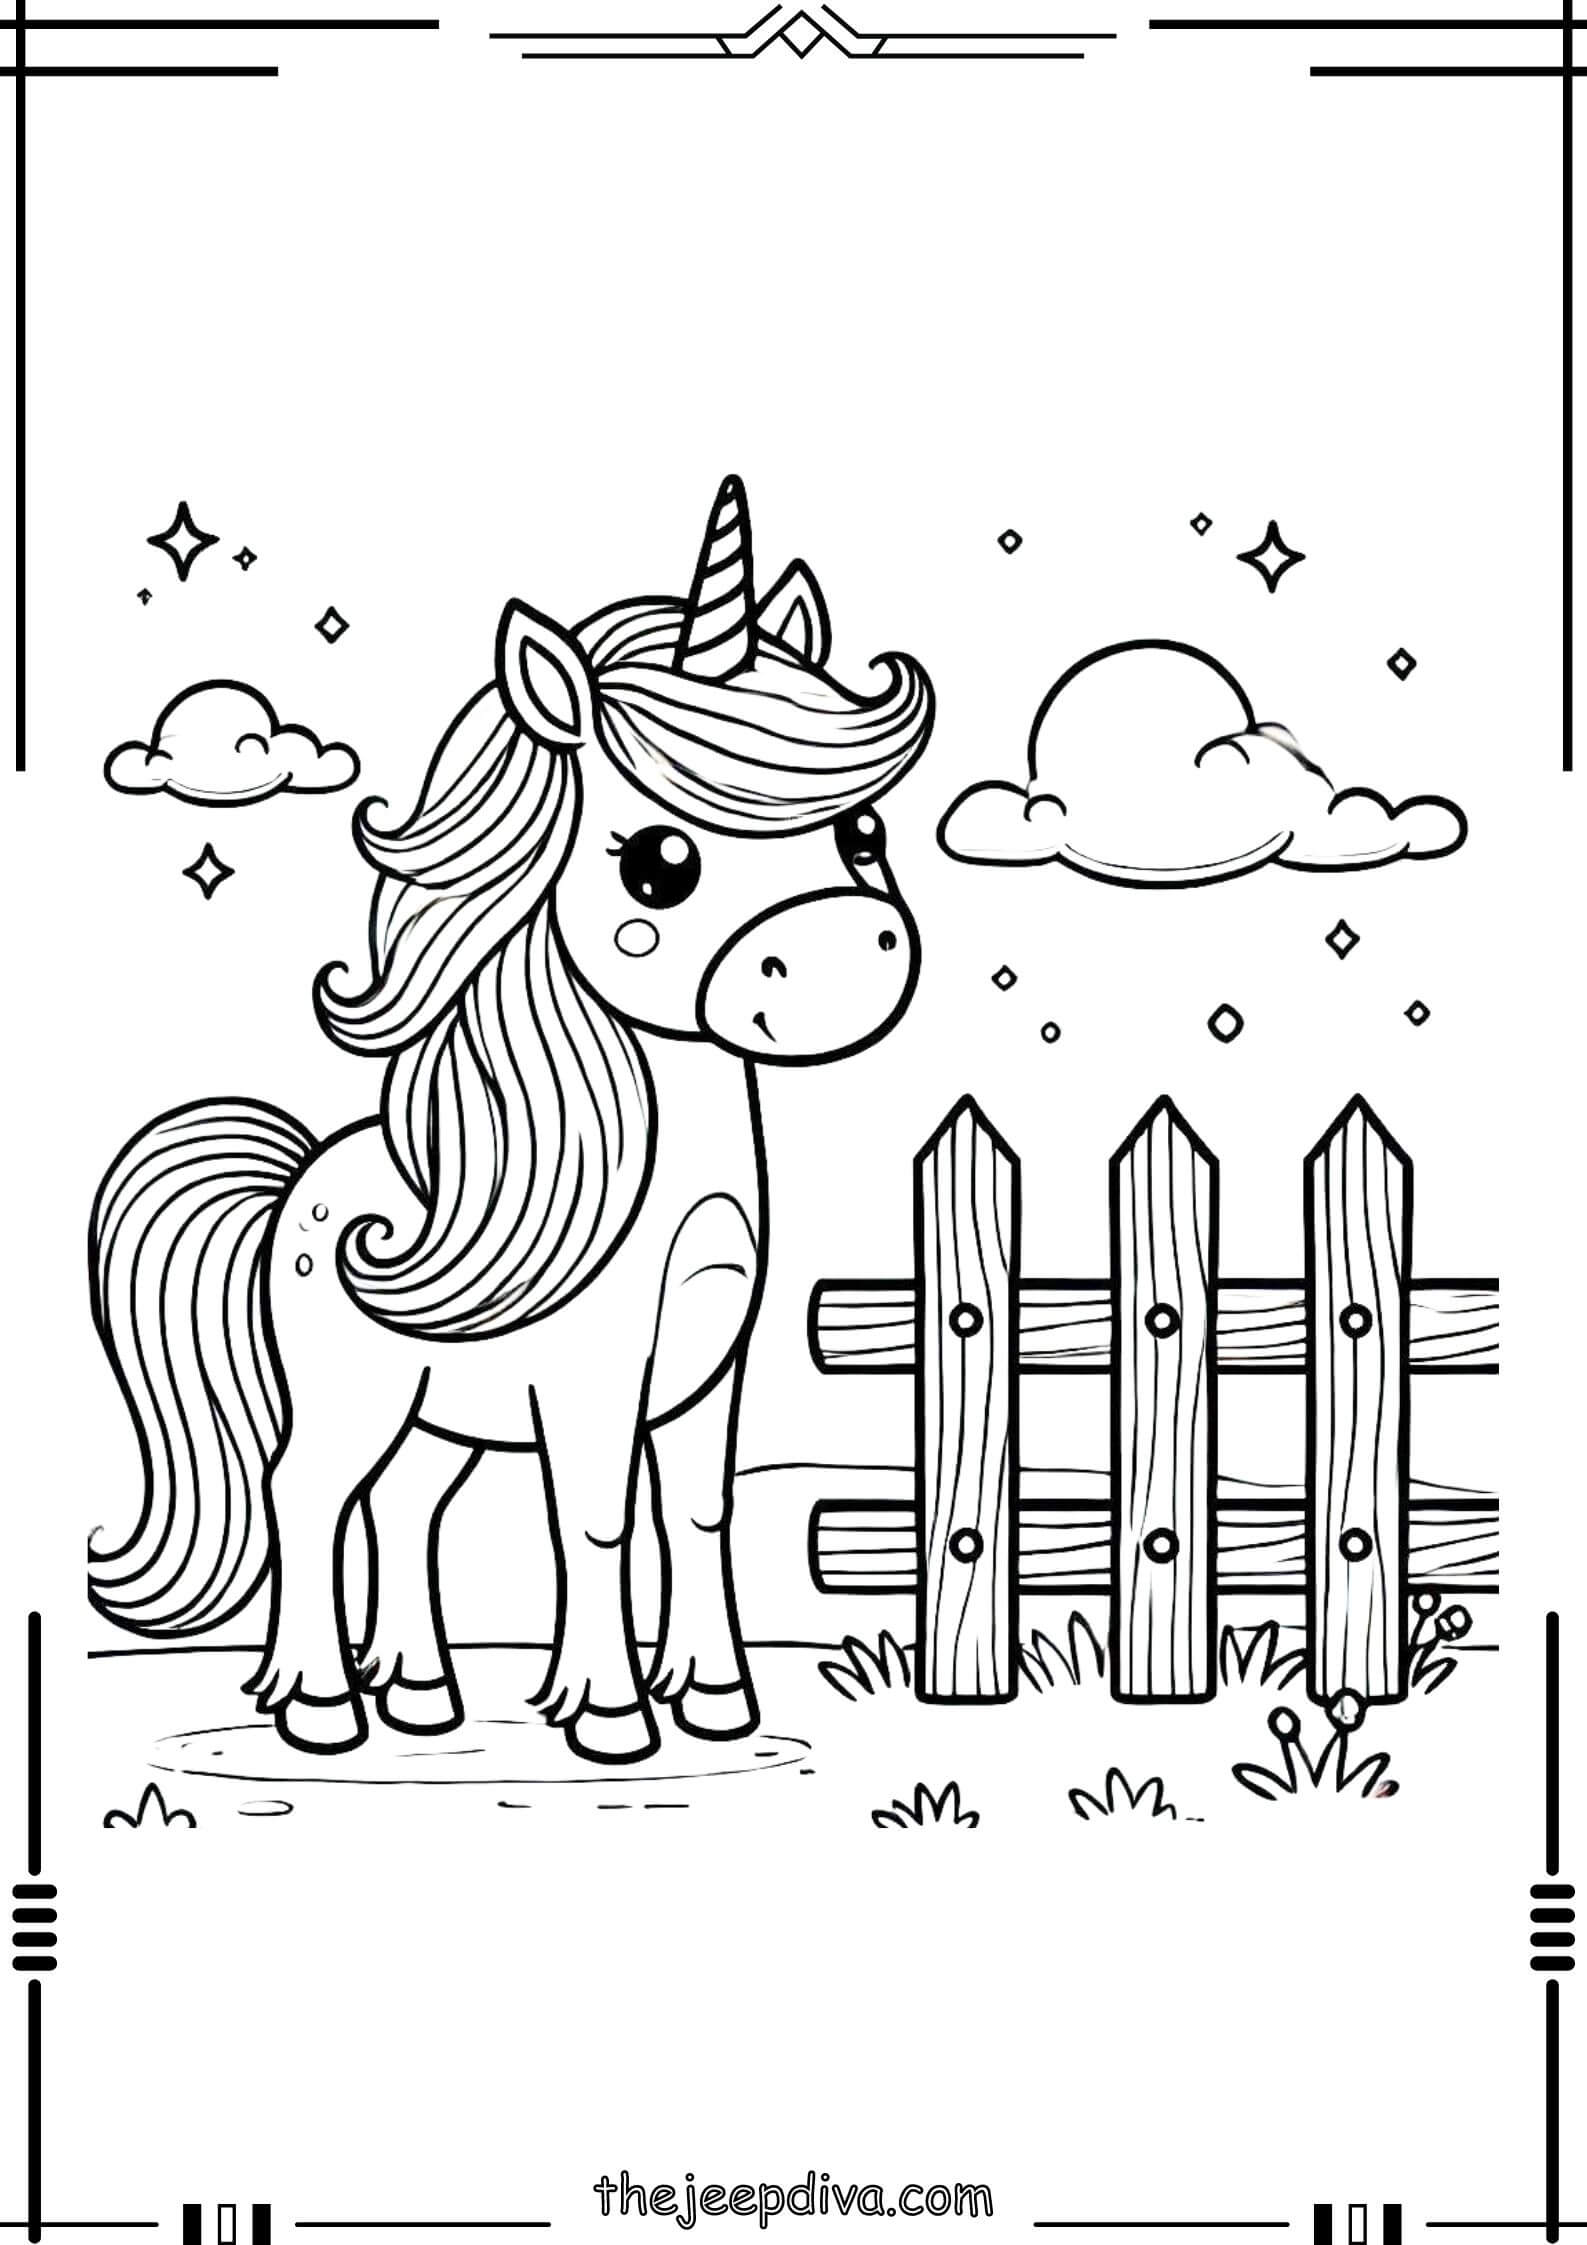 unicorn-coloring-page-medium-11